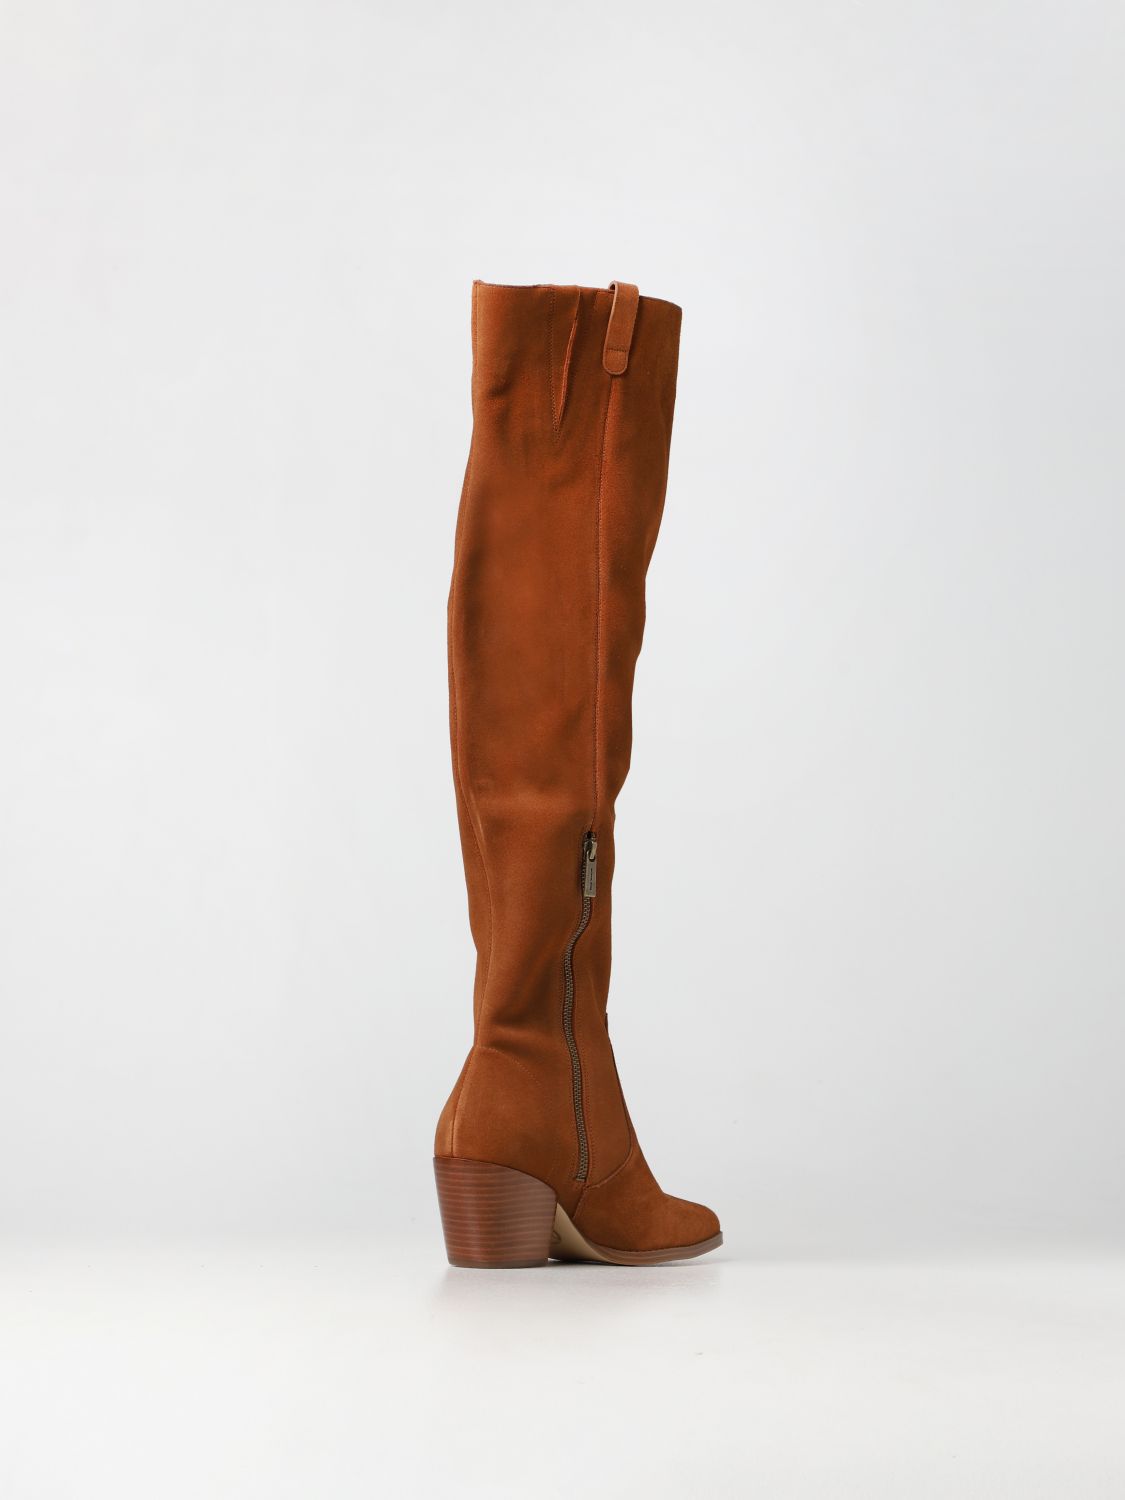 MICHAEL KORS: Boots women Michael - Camel | Boots Michael Kors ...